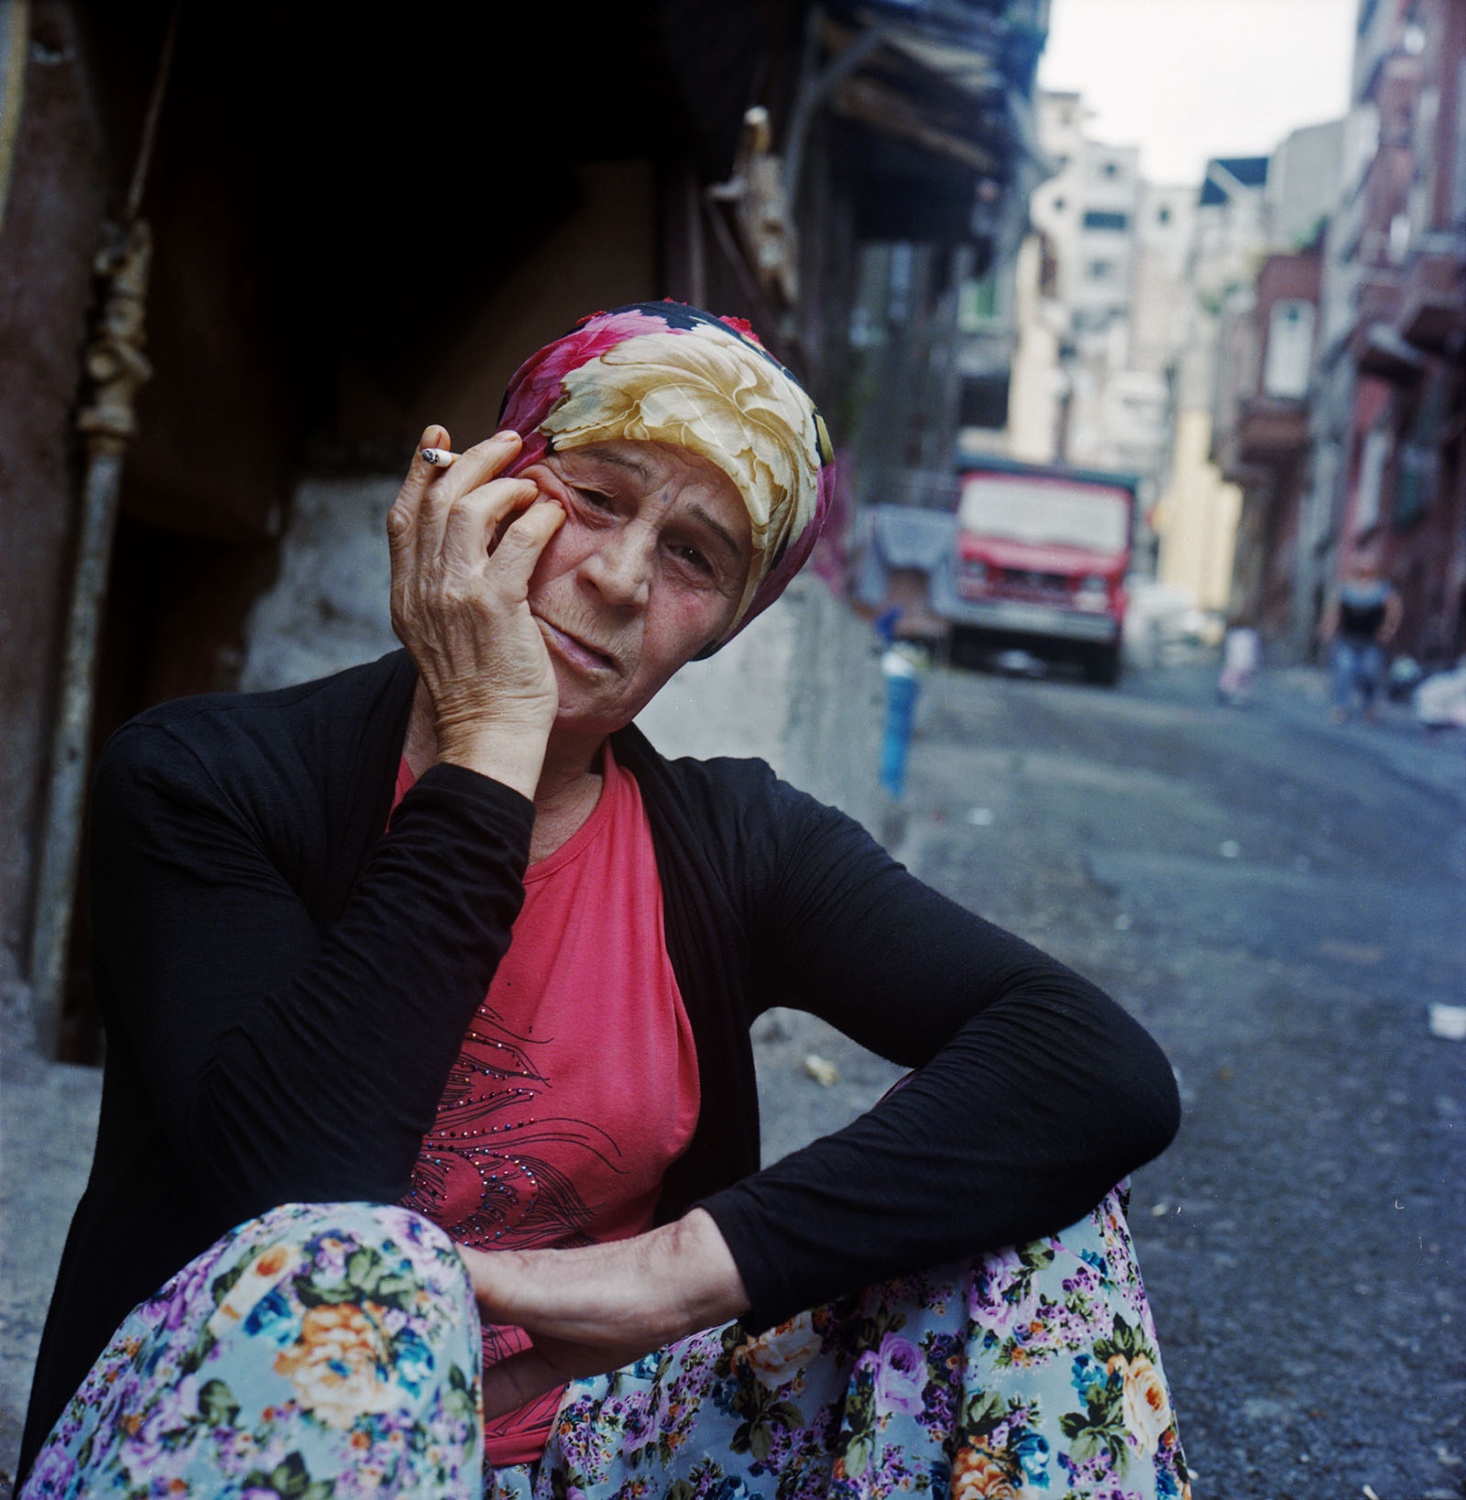 Last Dance of Tarlabasi - A Roma woman smoking on the street. Tarlabasi, Istanbul....